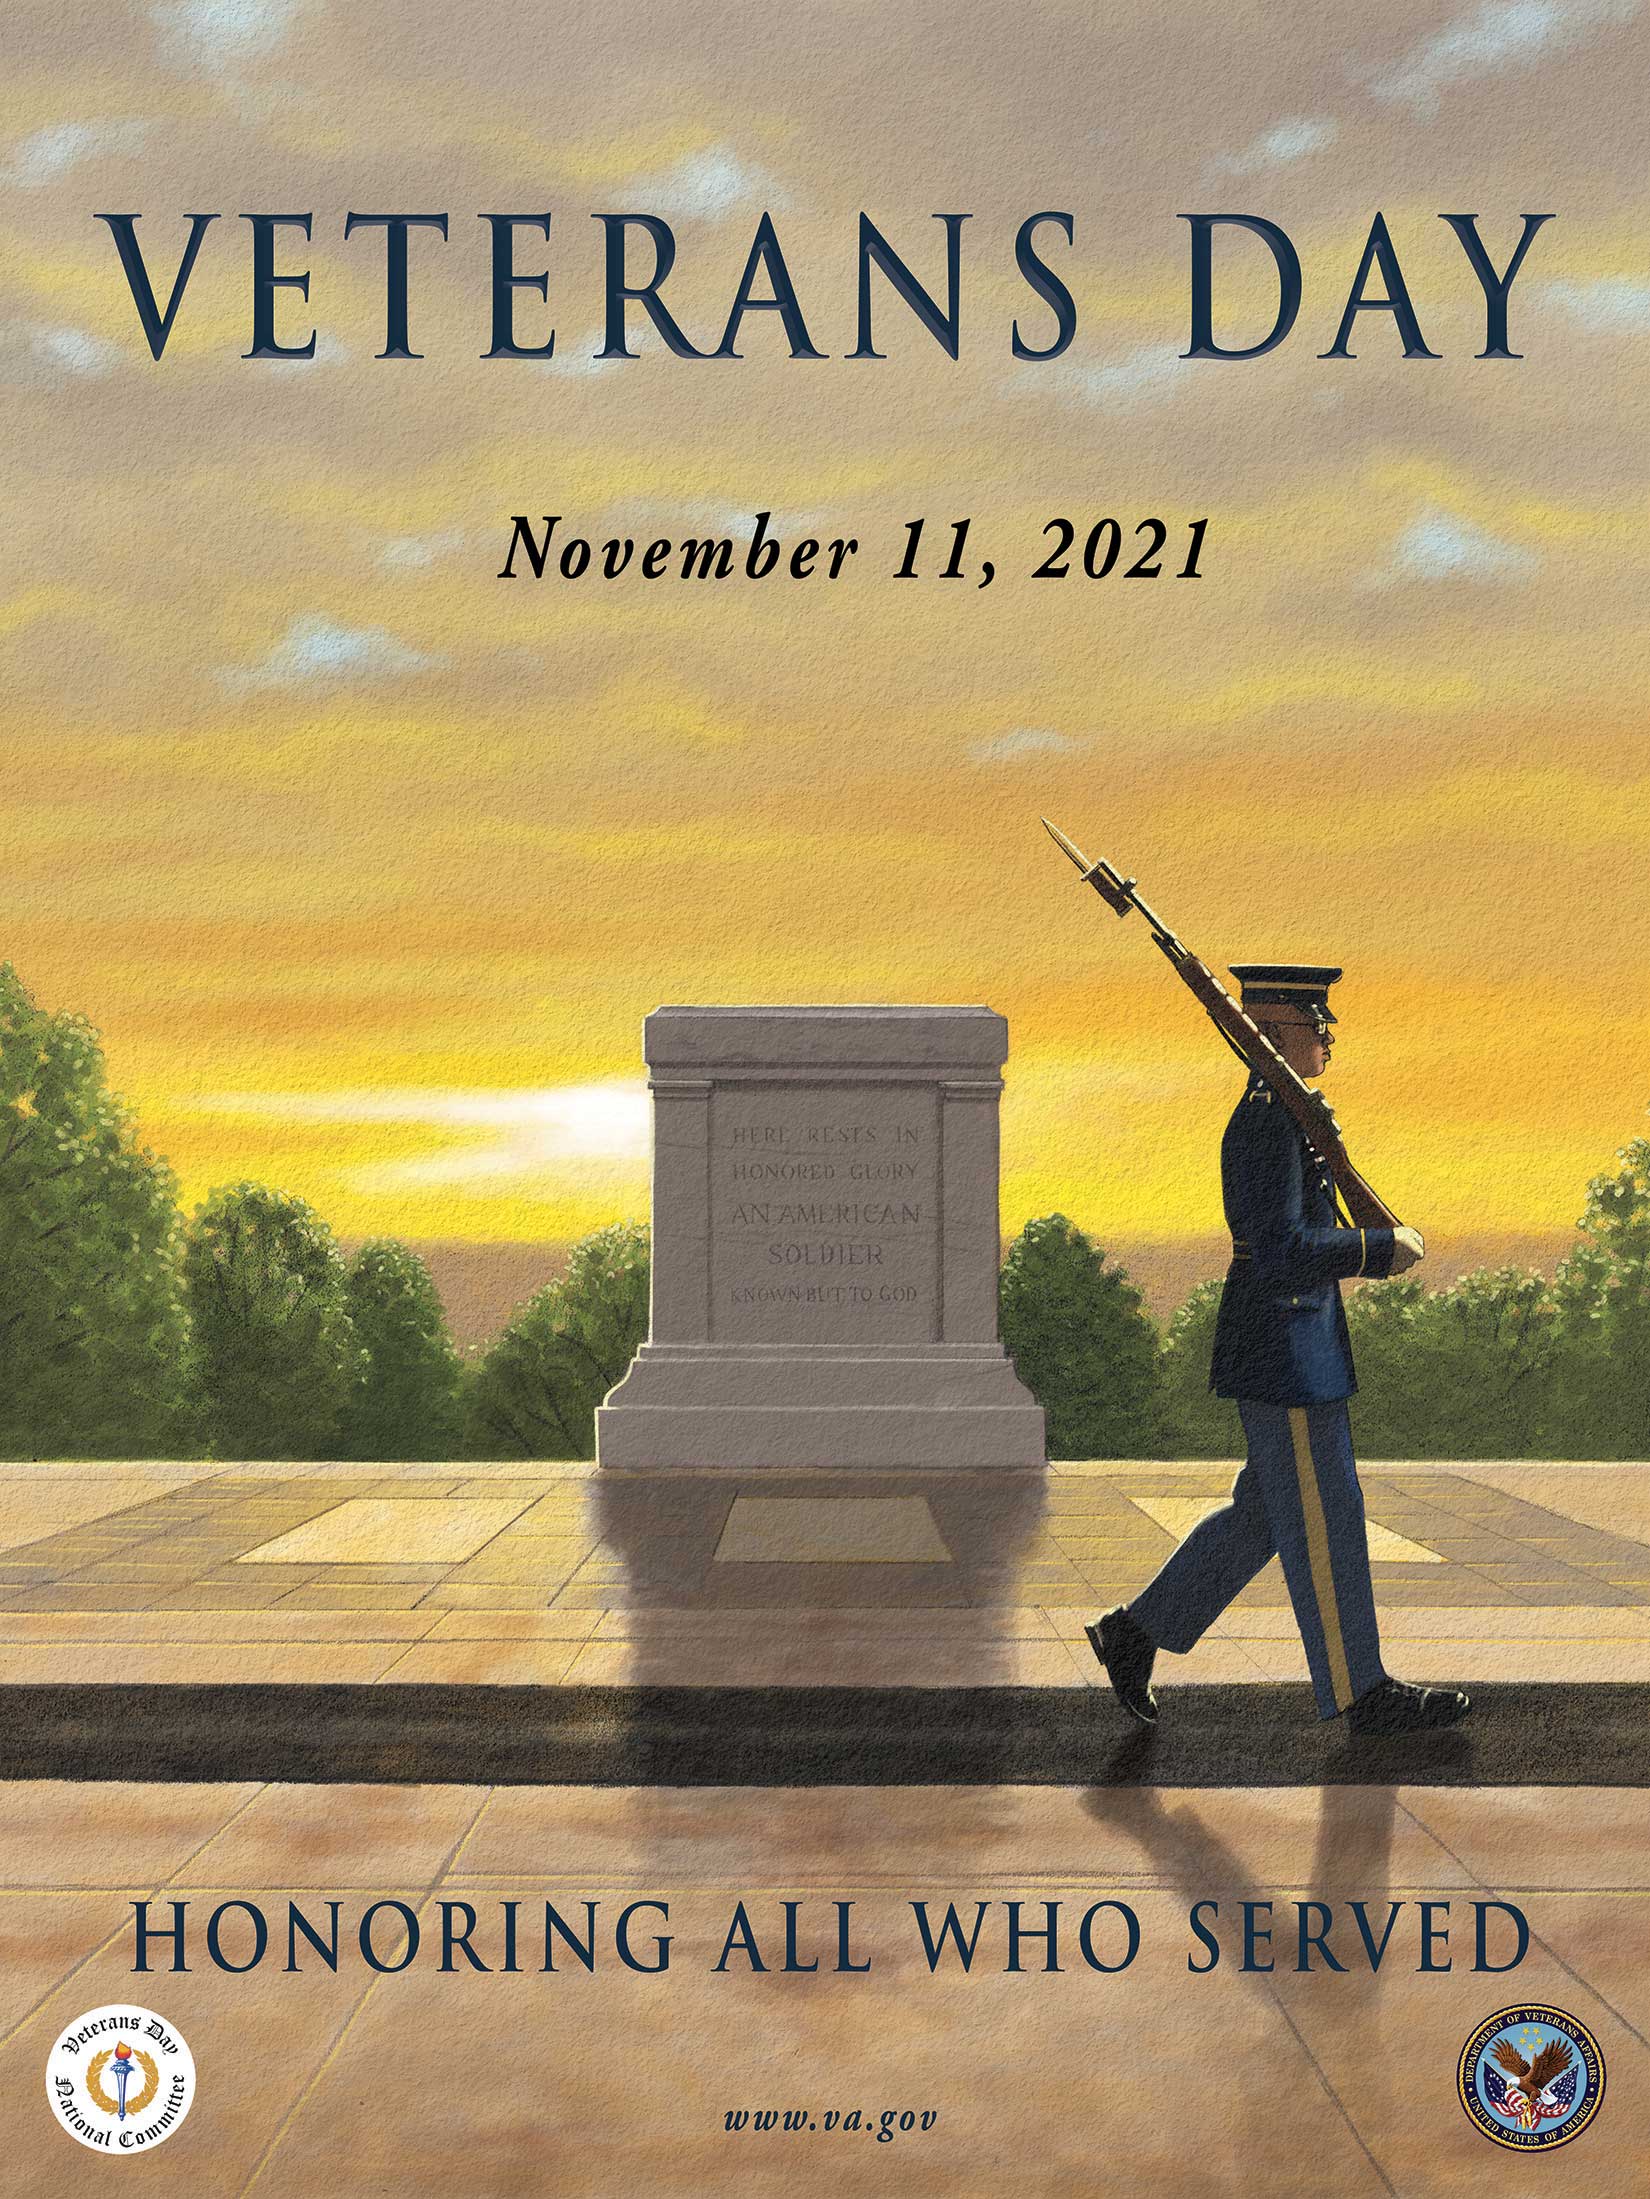 Veterans Day 2021 poster from Veterans Administration